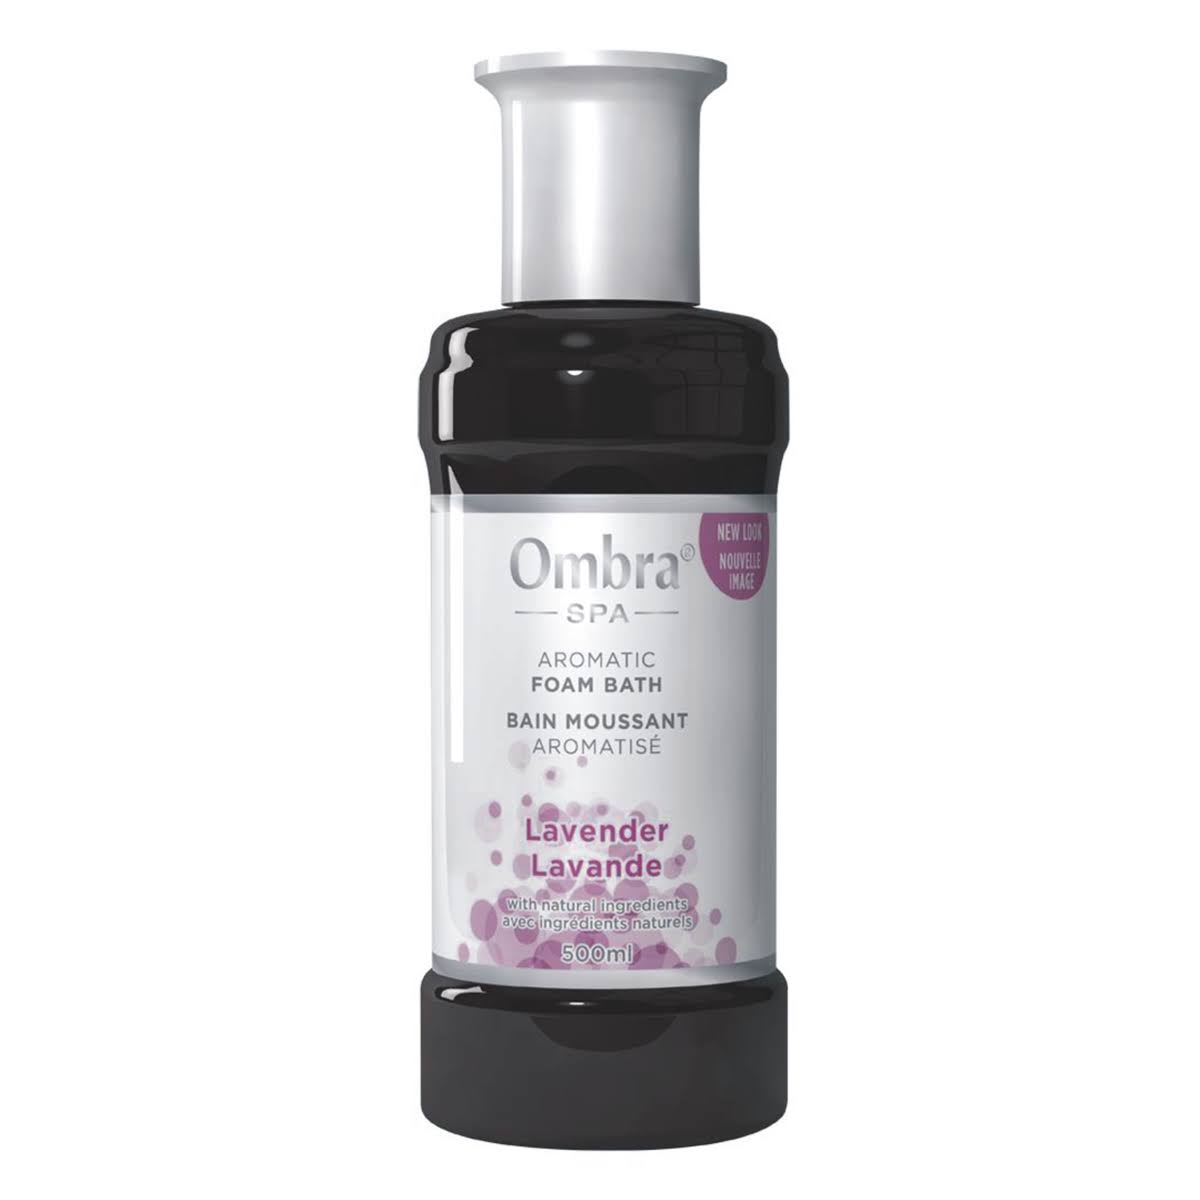 Ombra Spa Aromatic Foam Bath - Lavender, 16.9oz